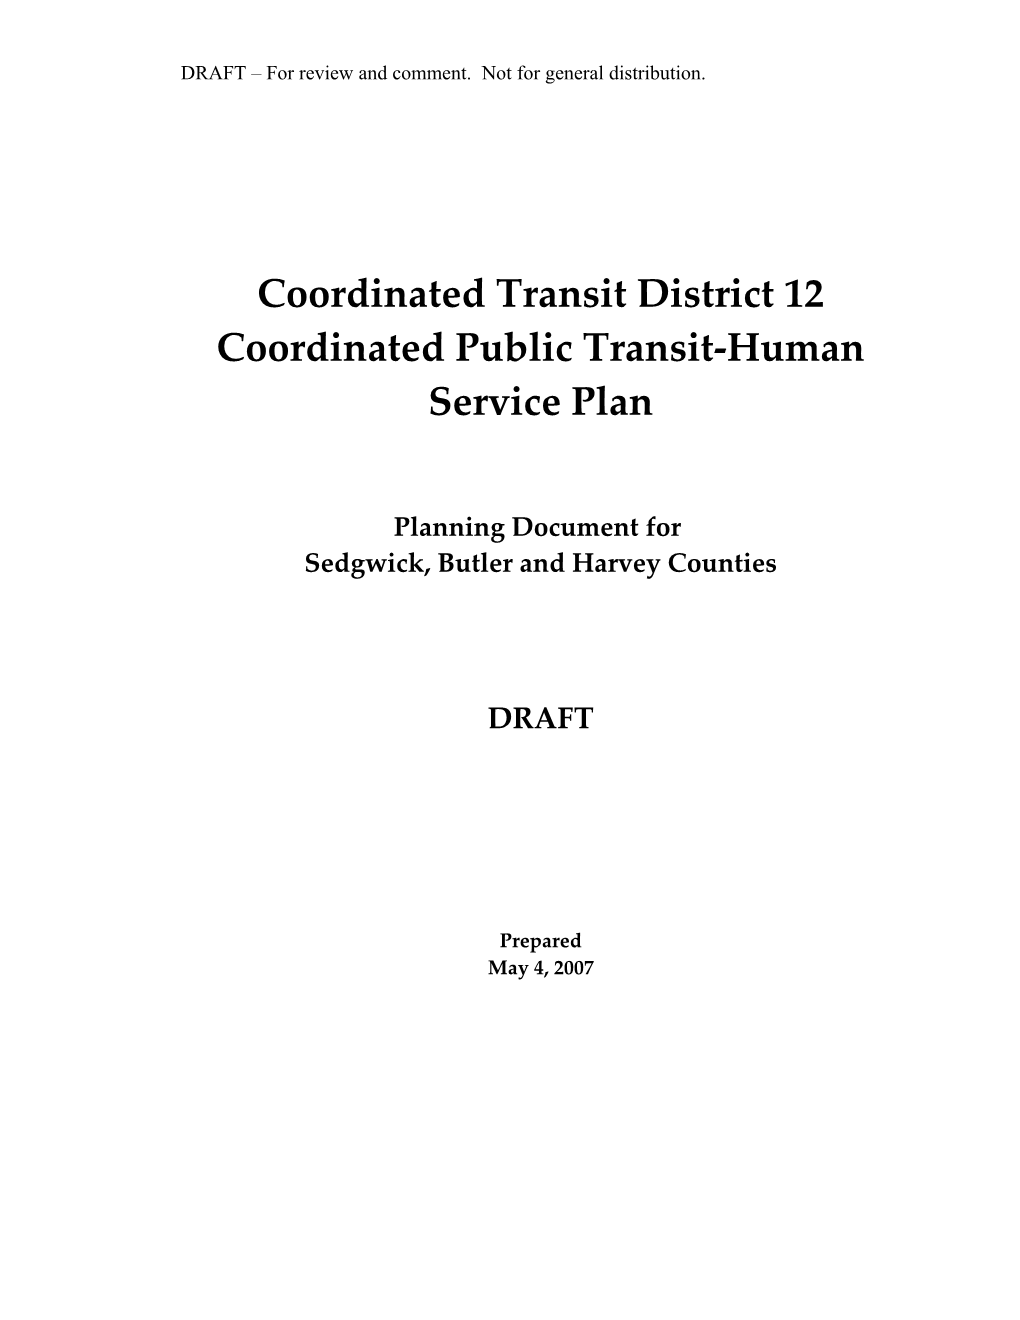 Coordinated Transit District 12